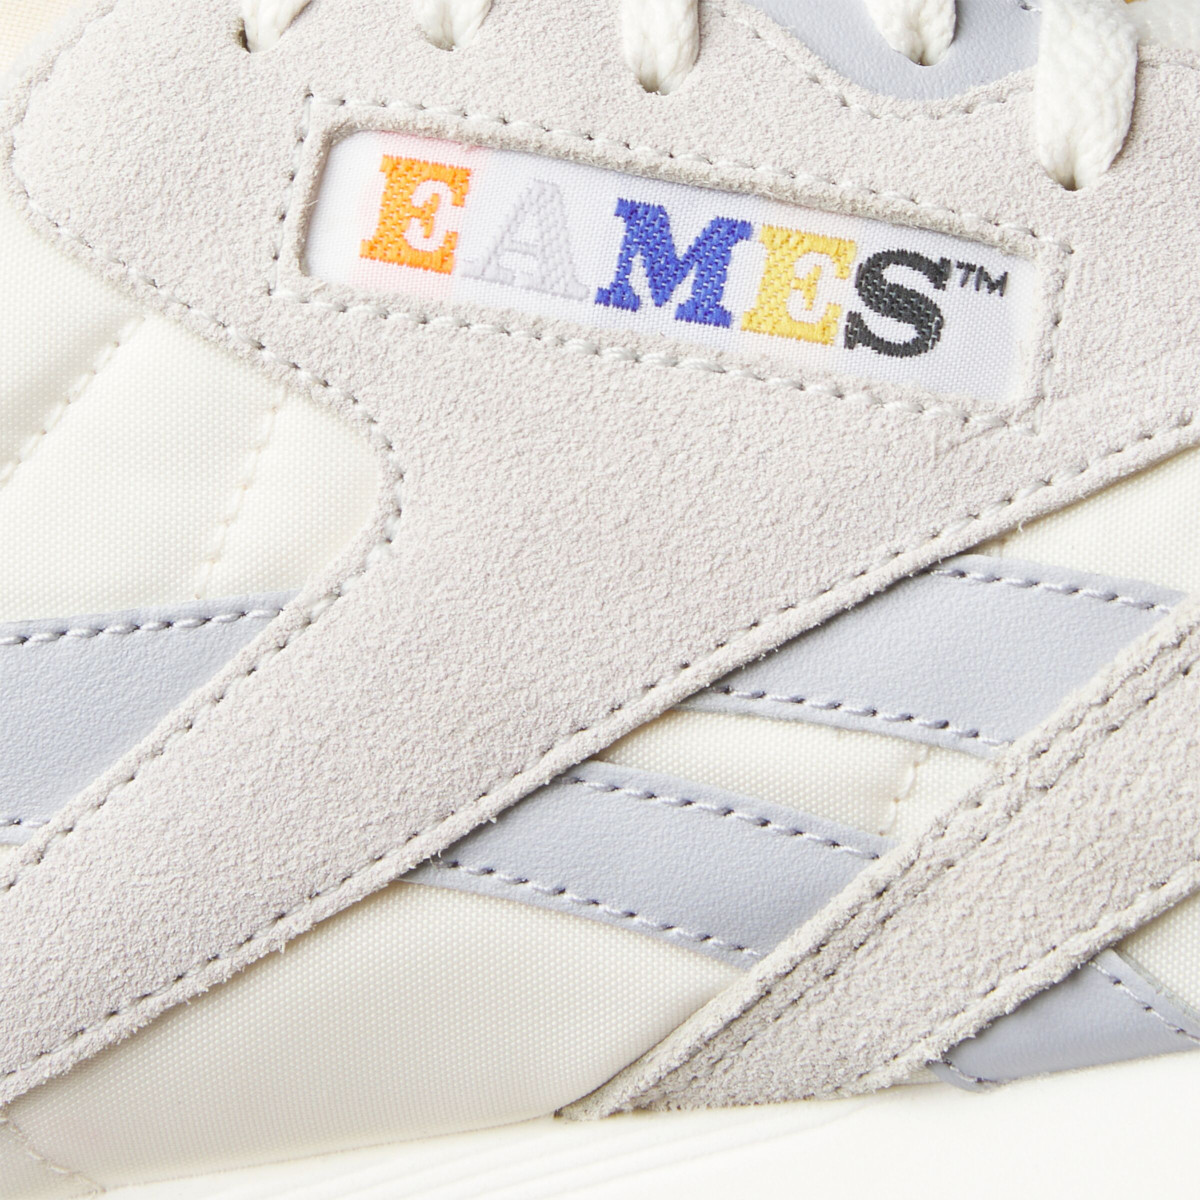 Where to Buy: Final Reebok x Eames Office Drop | Sneaker News